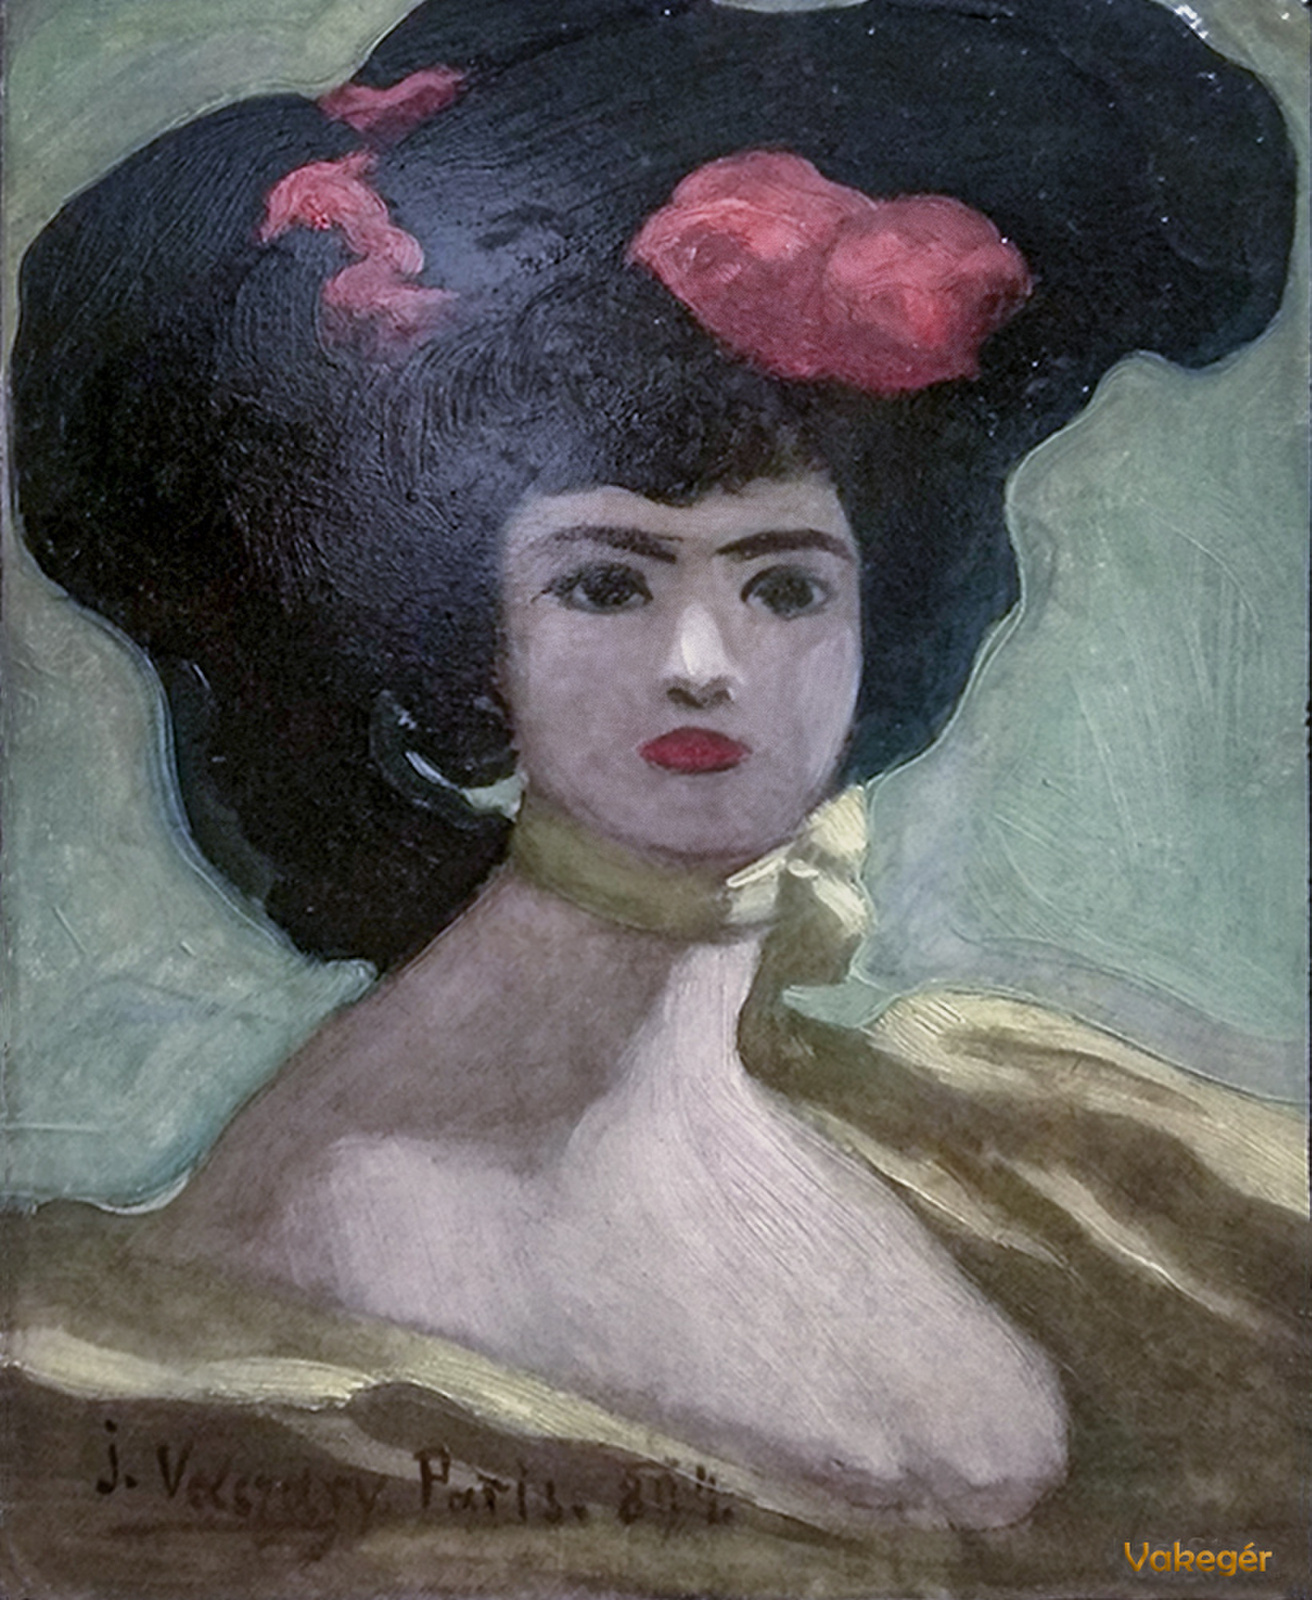 Nemzeti Galéria - Fekete kalapos nő - Vaszary János